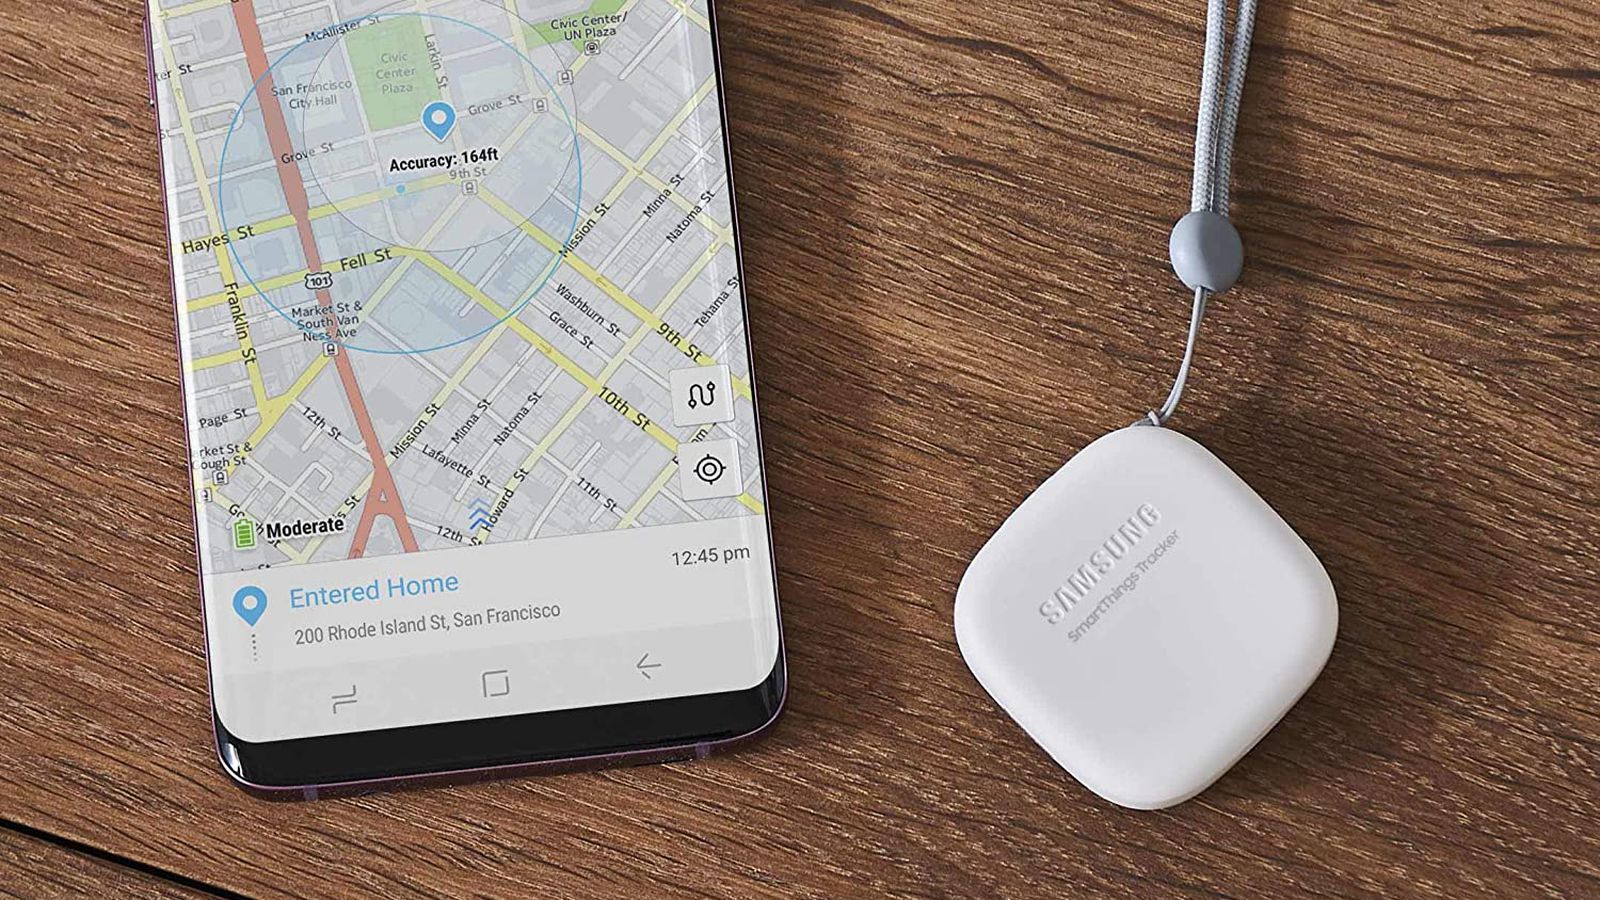 Samsung SmartThings Update Aims to Prevent Tracker-Based Stalking